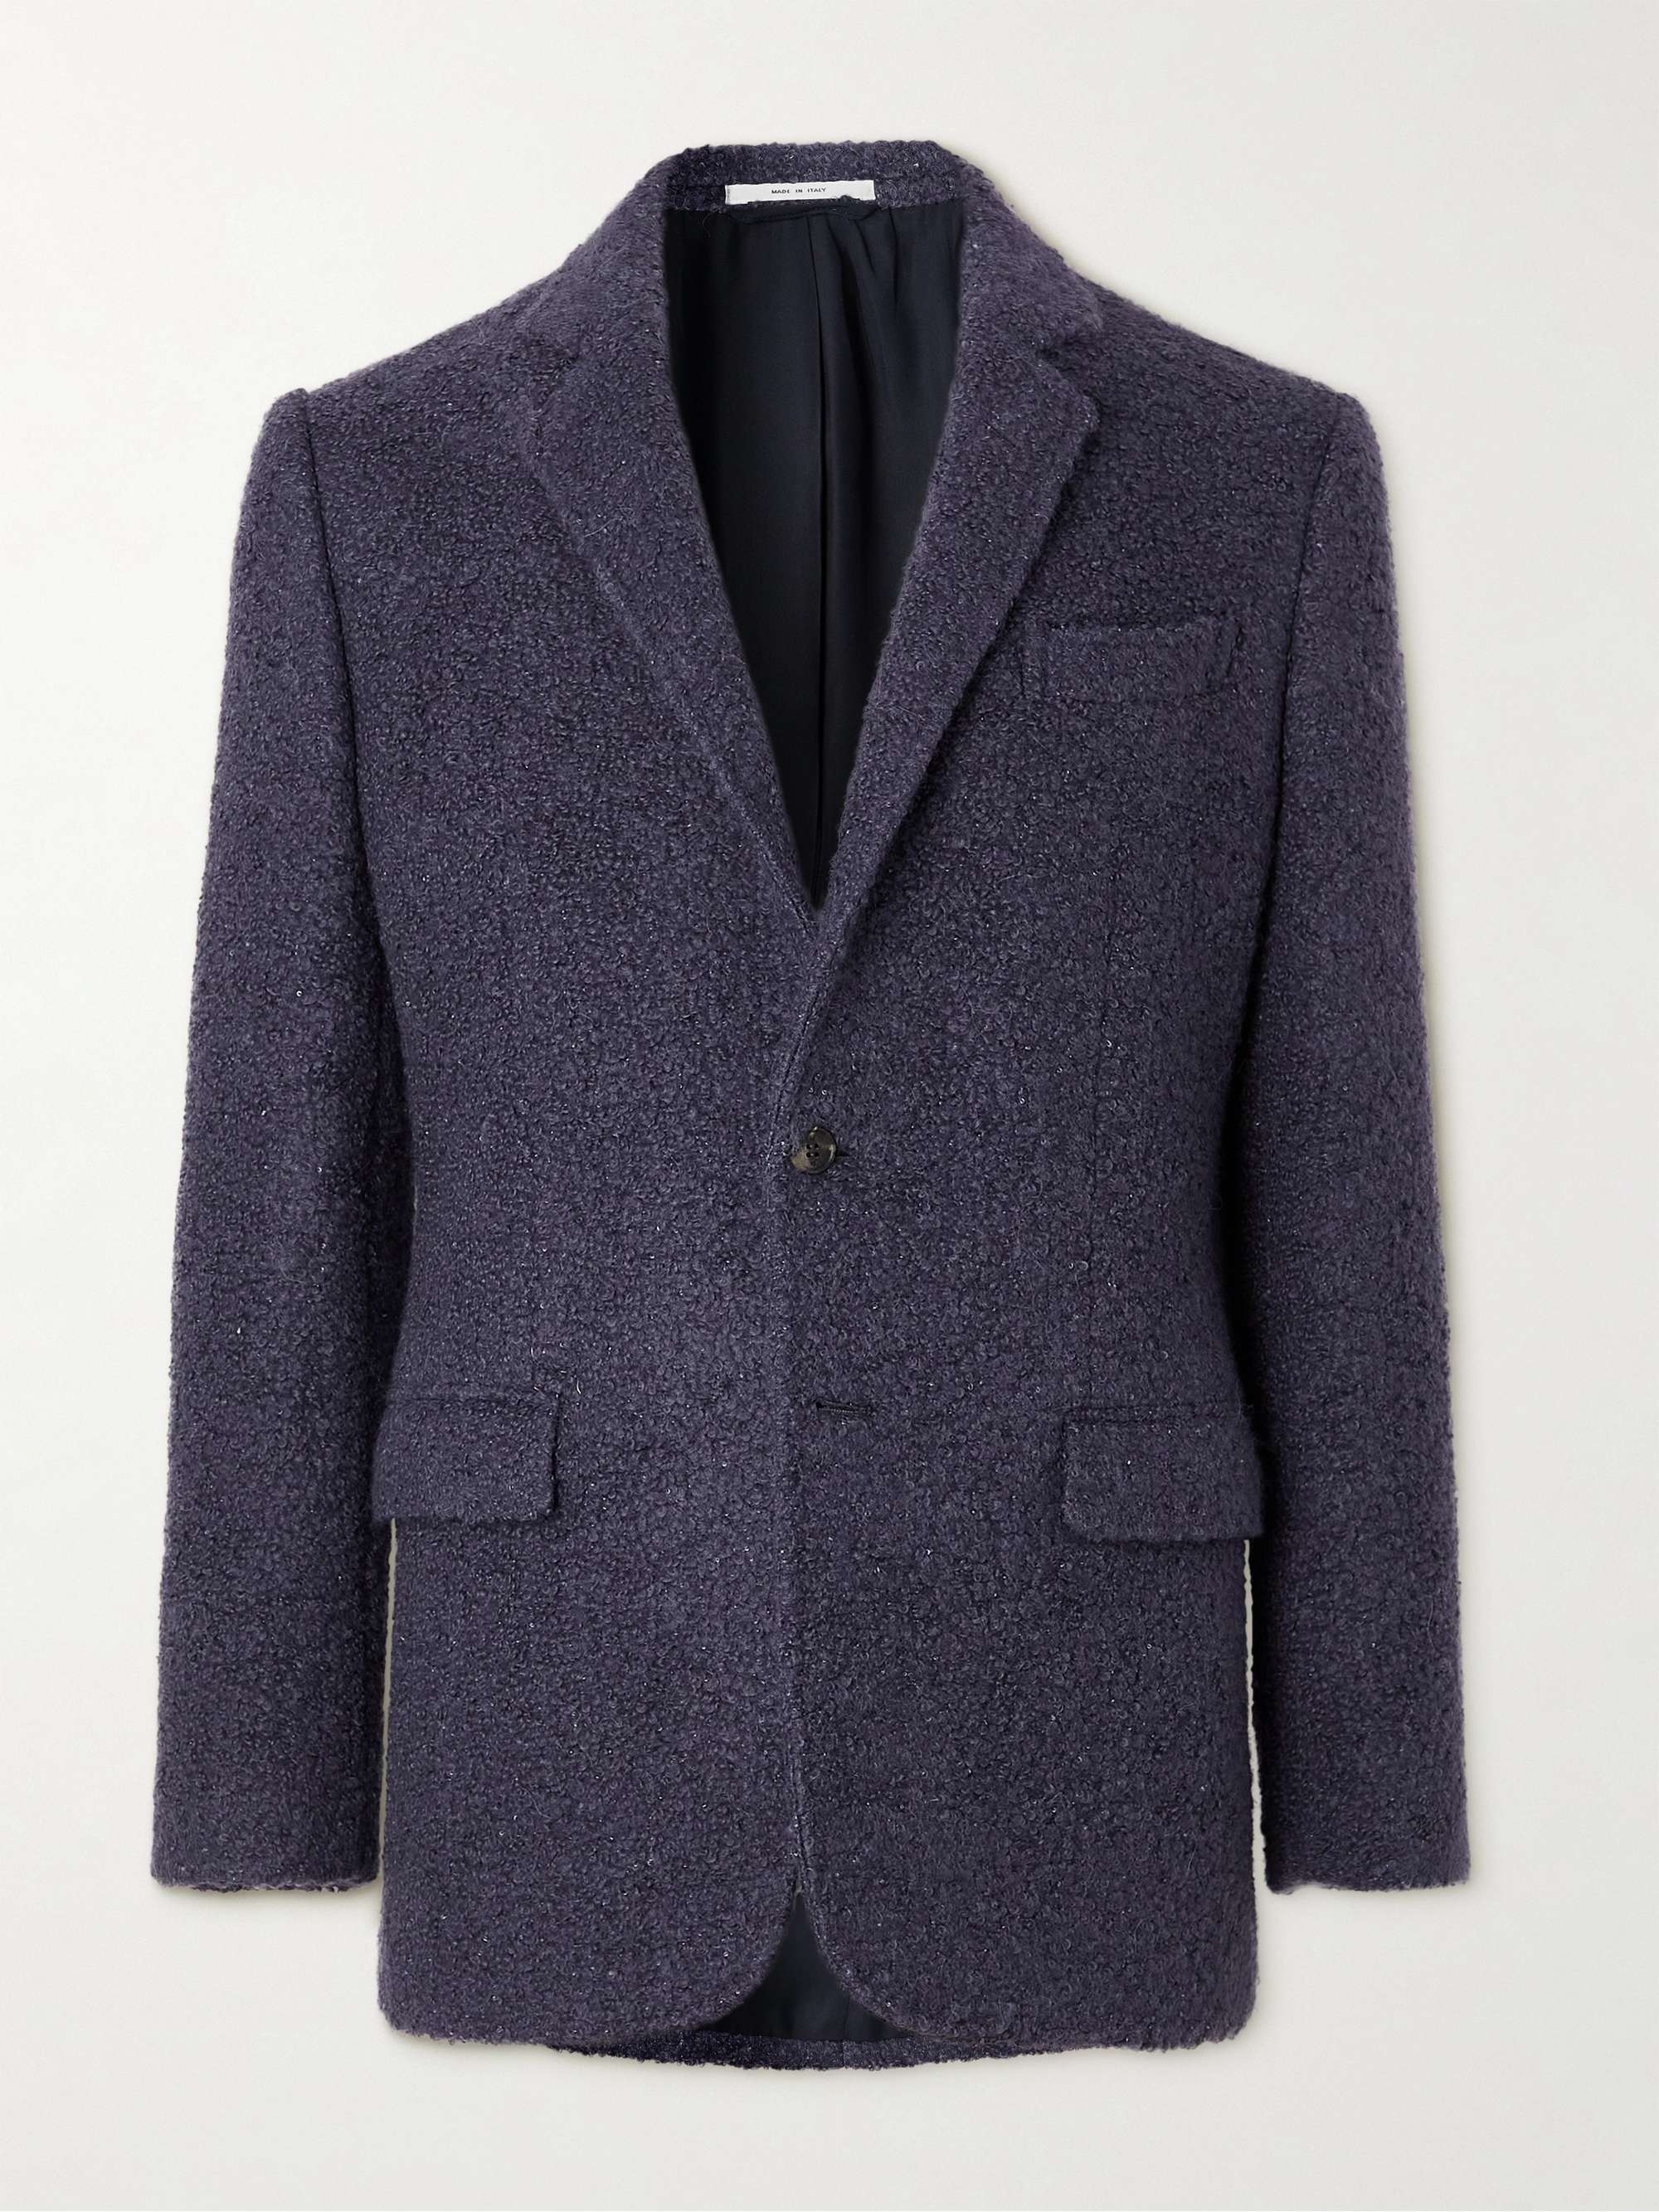 GABRIELA HEARST Dante Alpaca, Wool, Cashmere and Silk-Blend Suit Jacket